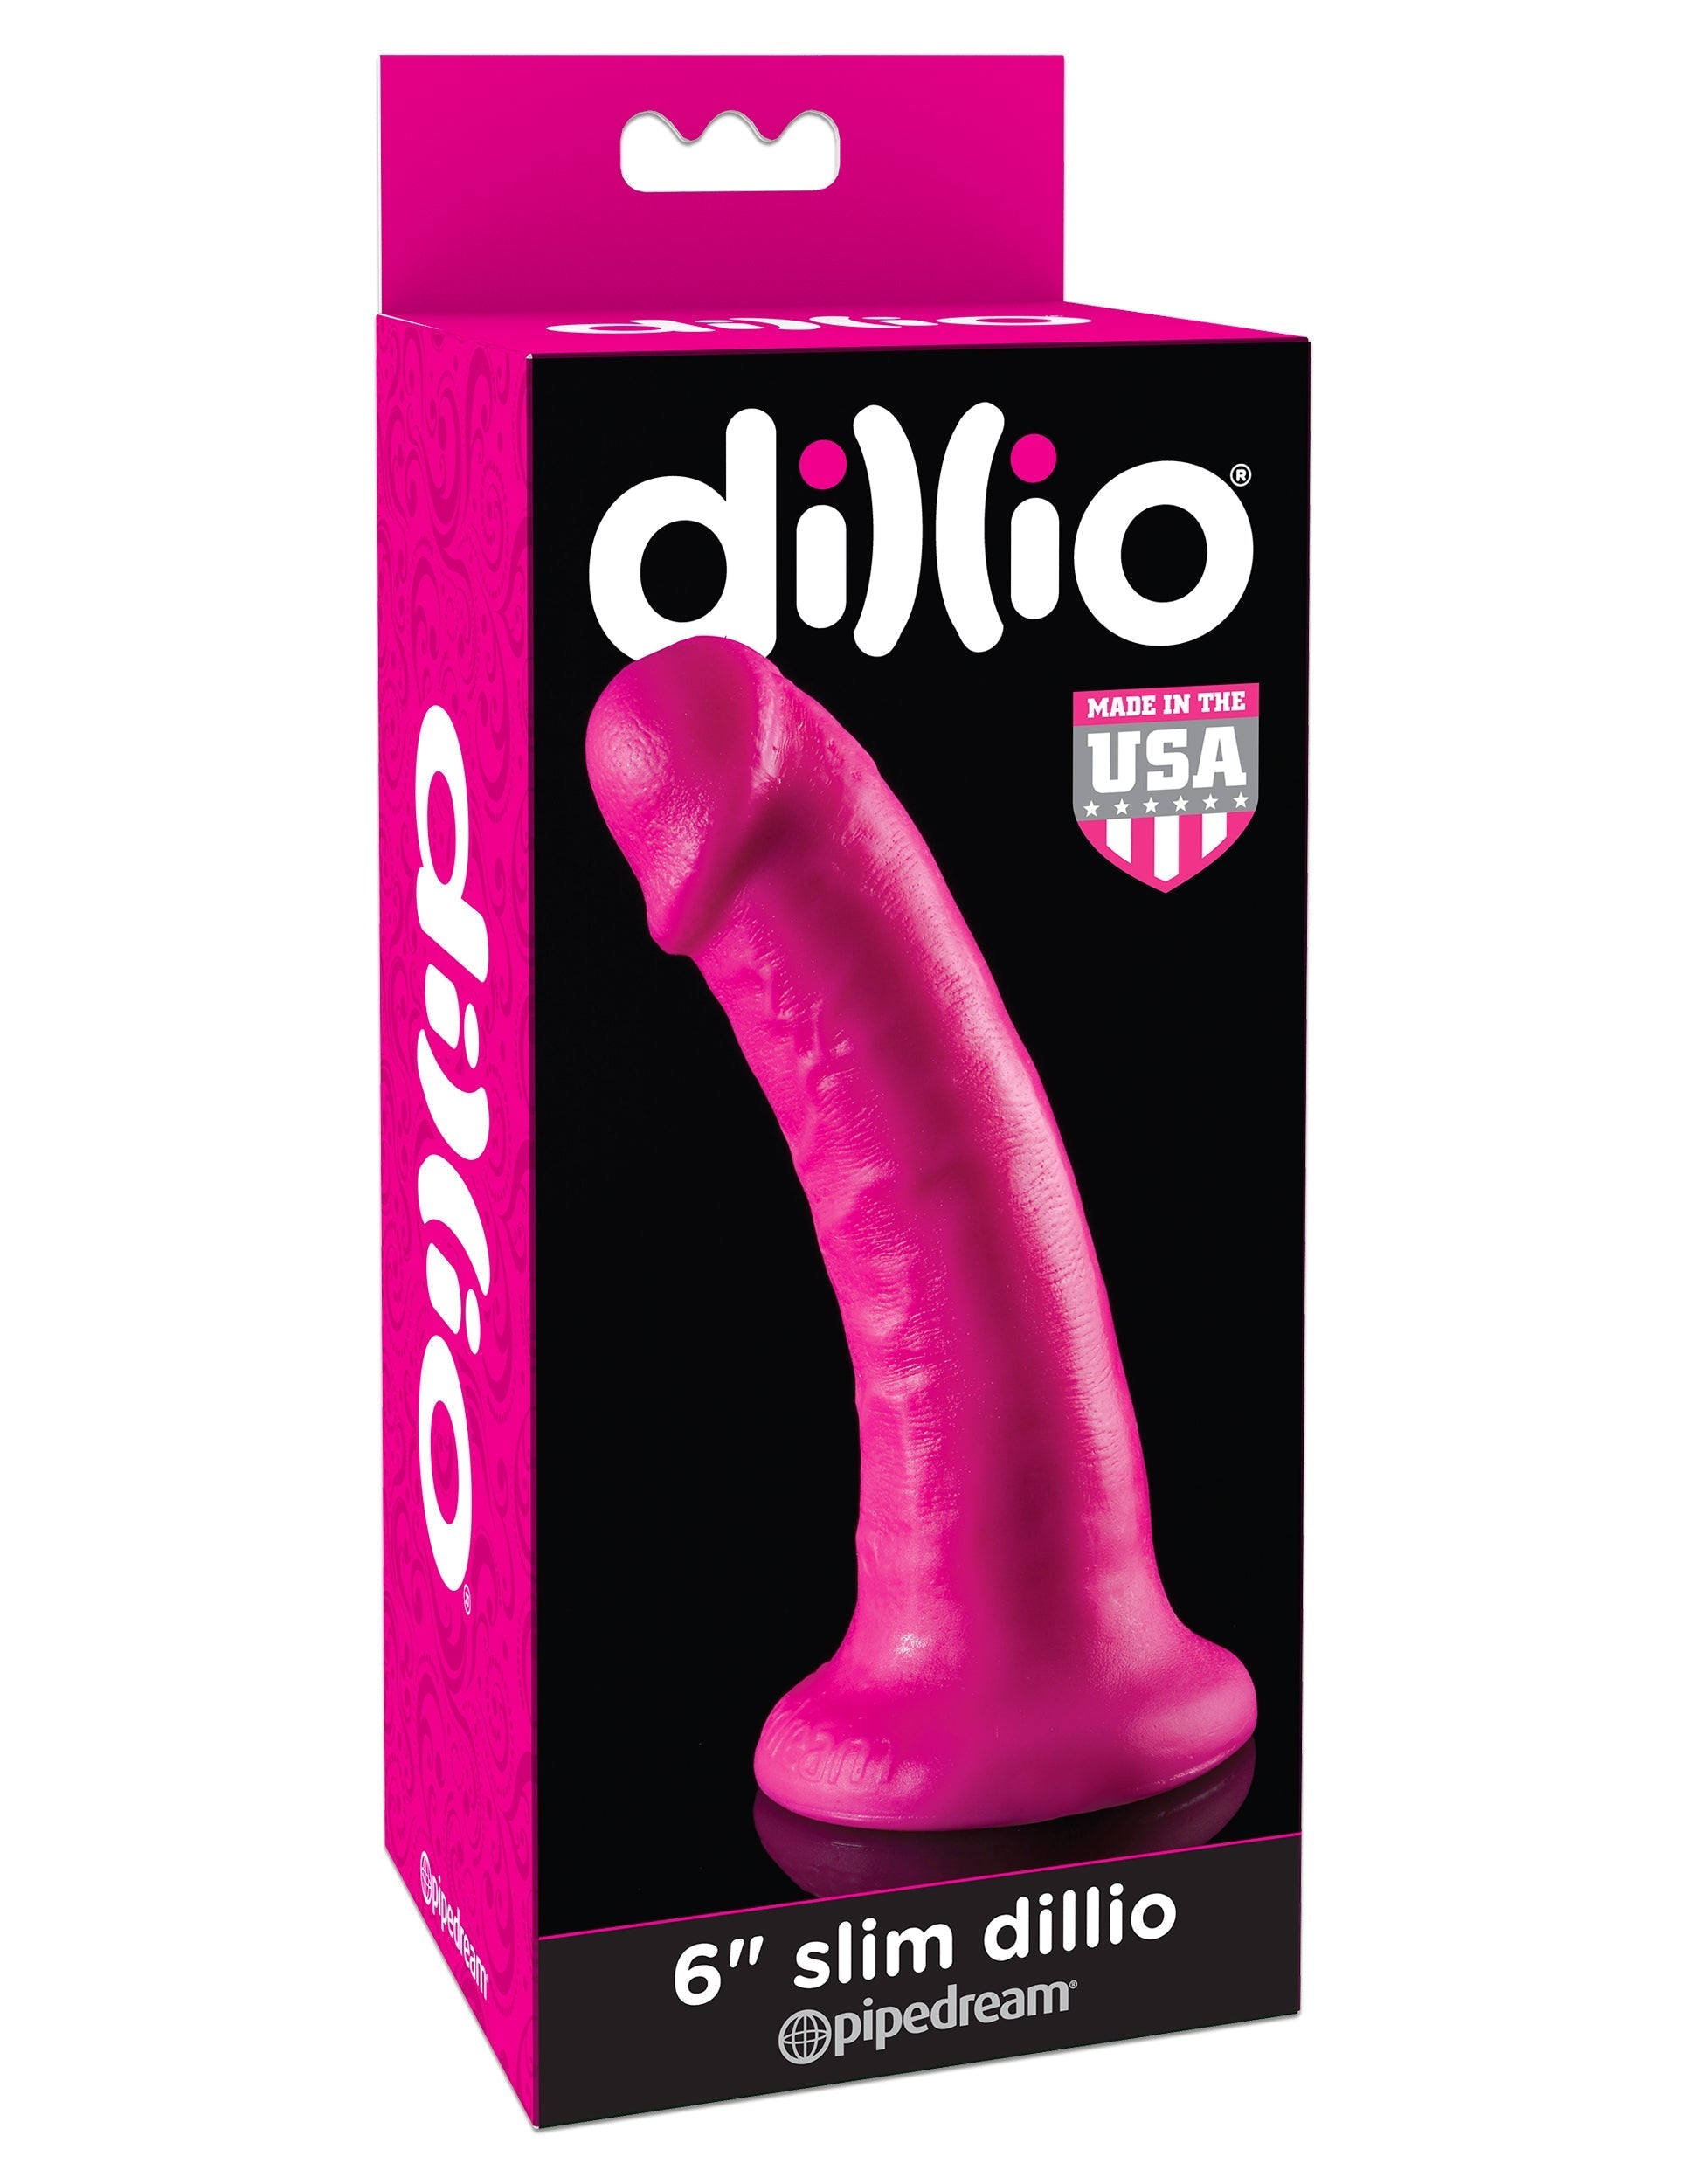 Dillio 6-Inch Slim Dillio Pink / 6"